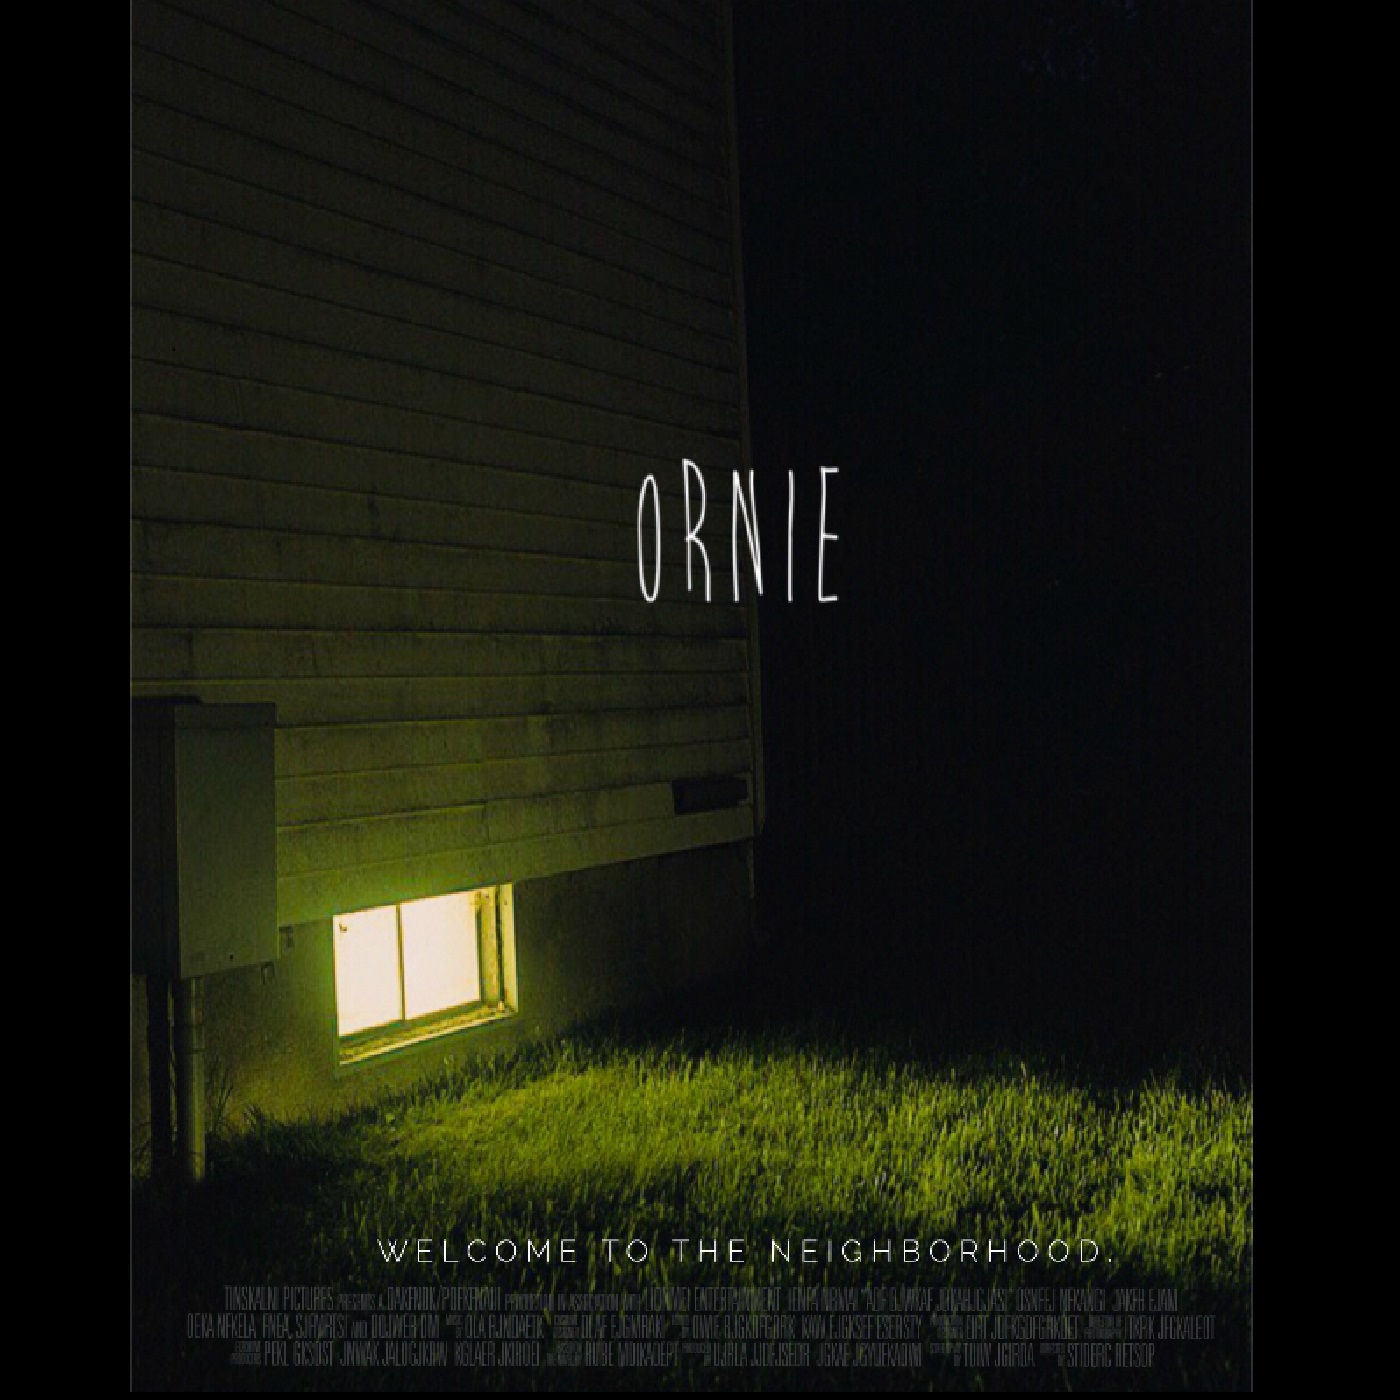 Episode 83 - Ornie